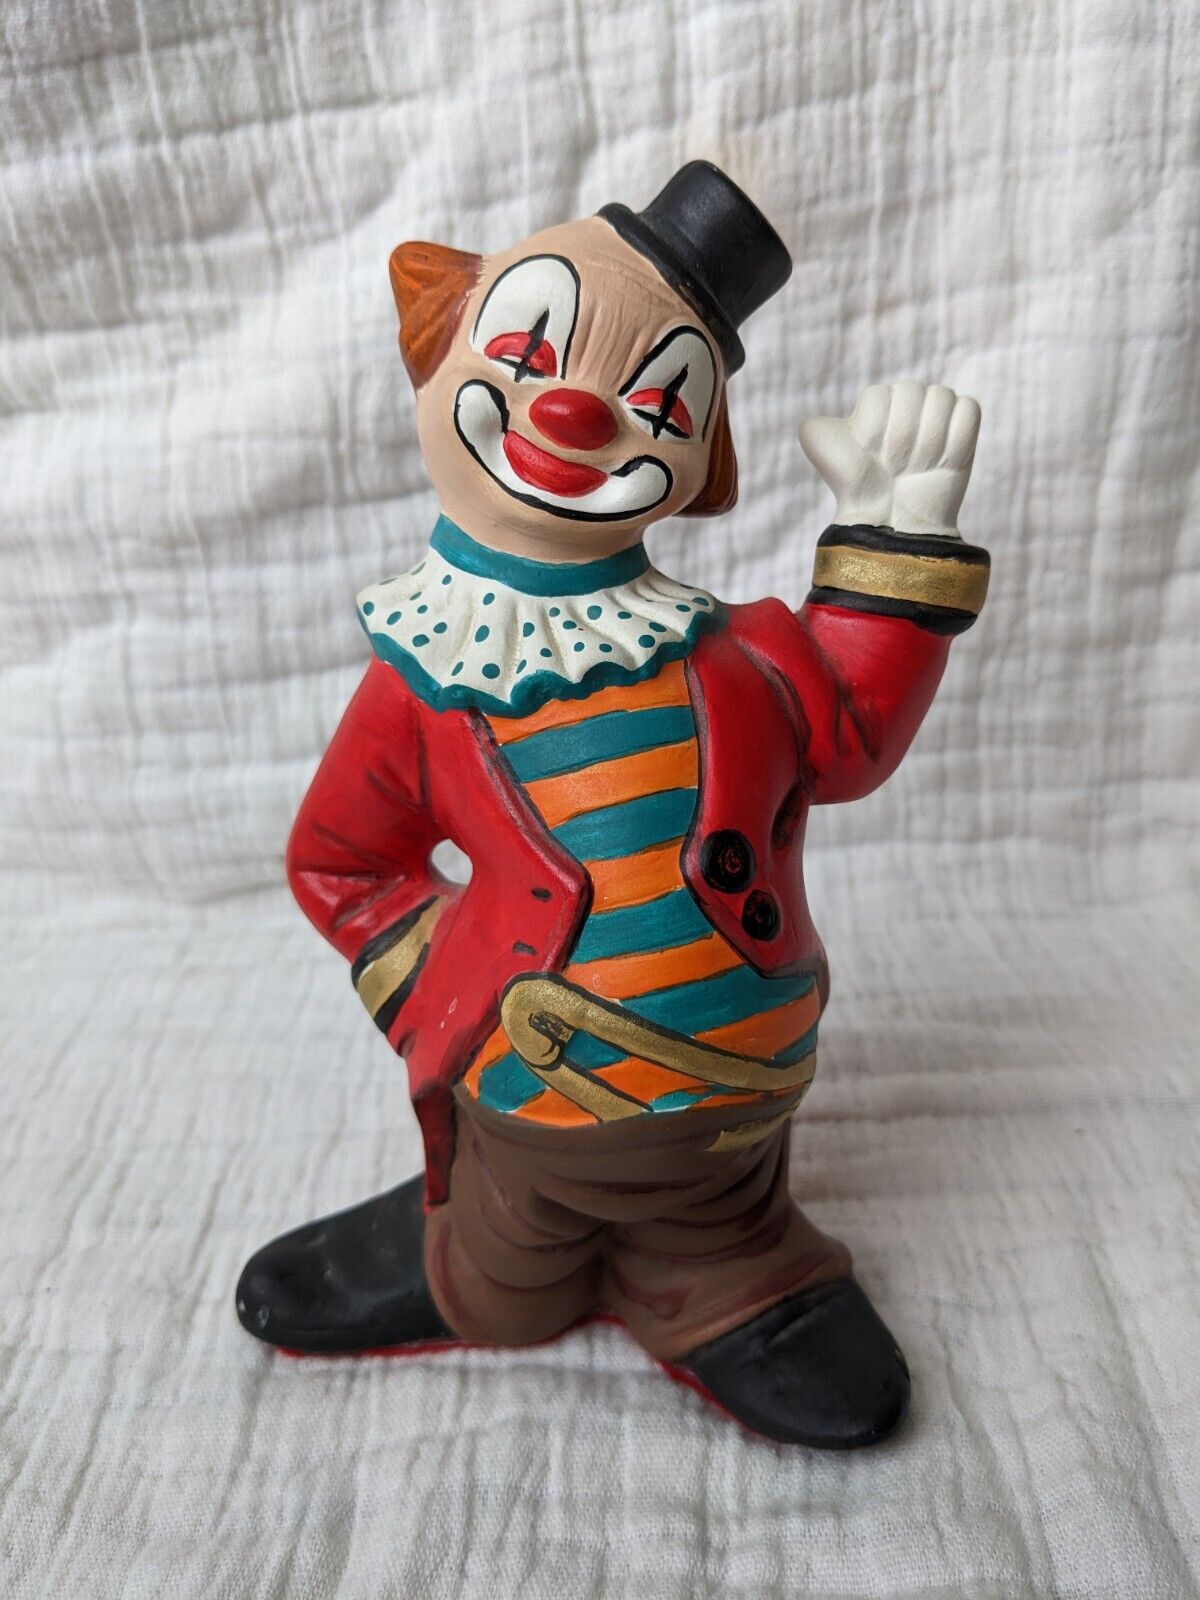 Vintage Ceramic Hand Painted Clown Waving figurine